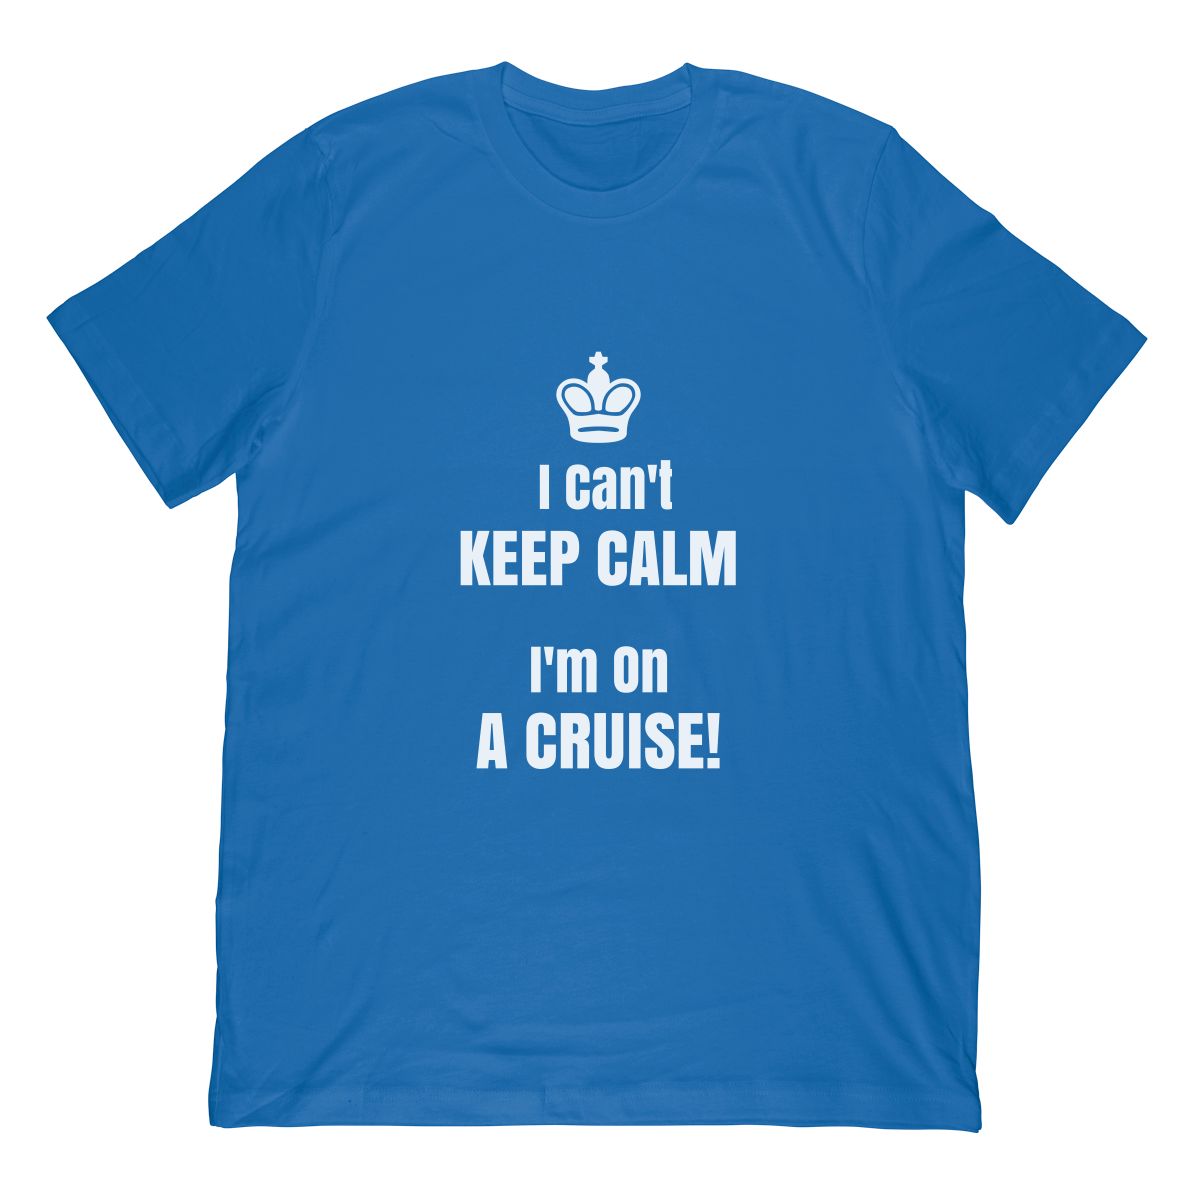 Funny Cruise Shirt I Can’t Keep Calm I’m On A Cruise!